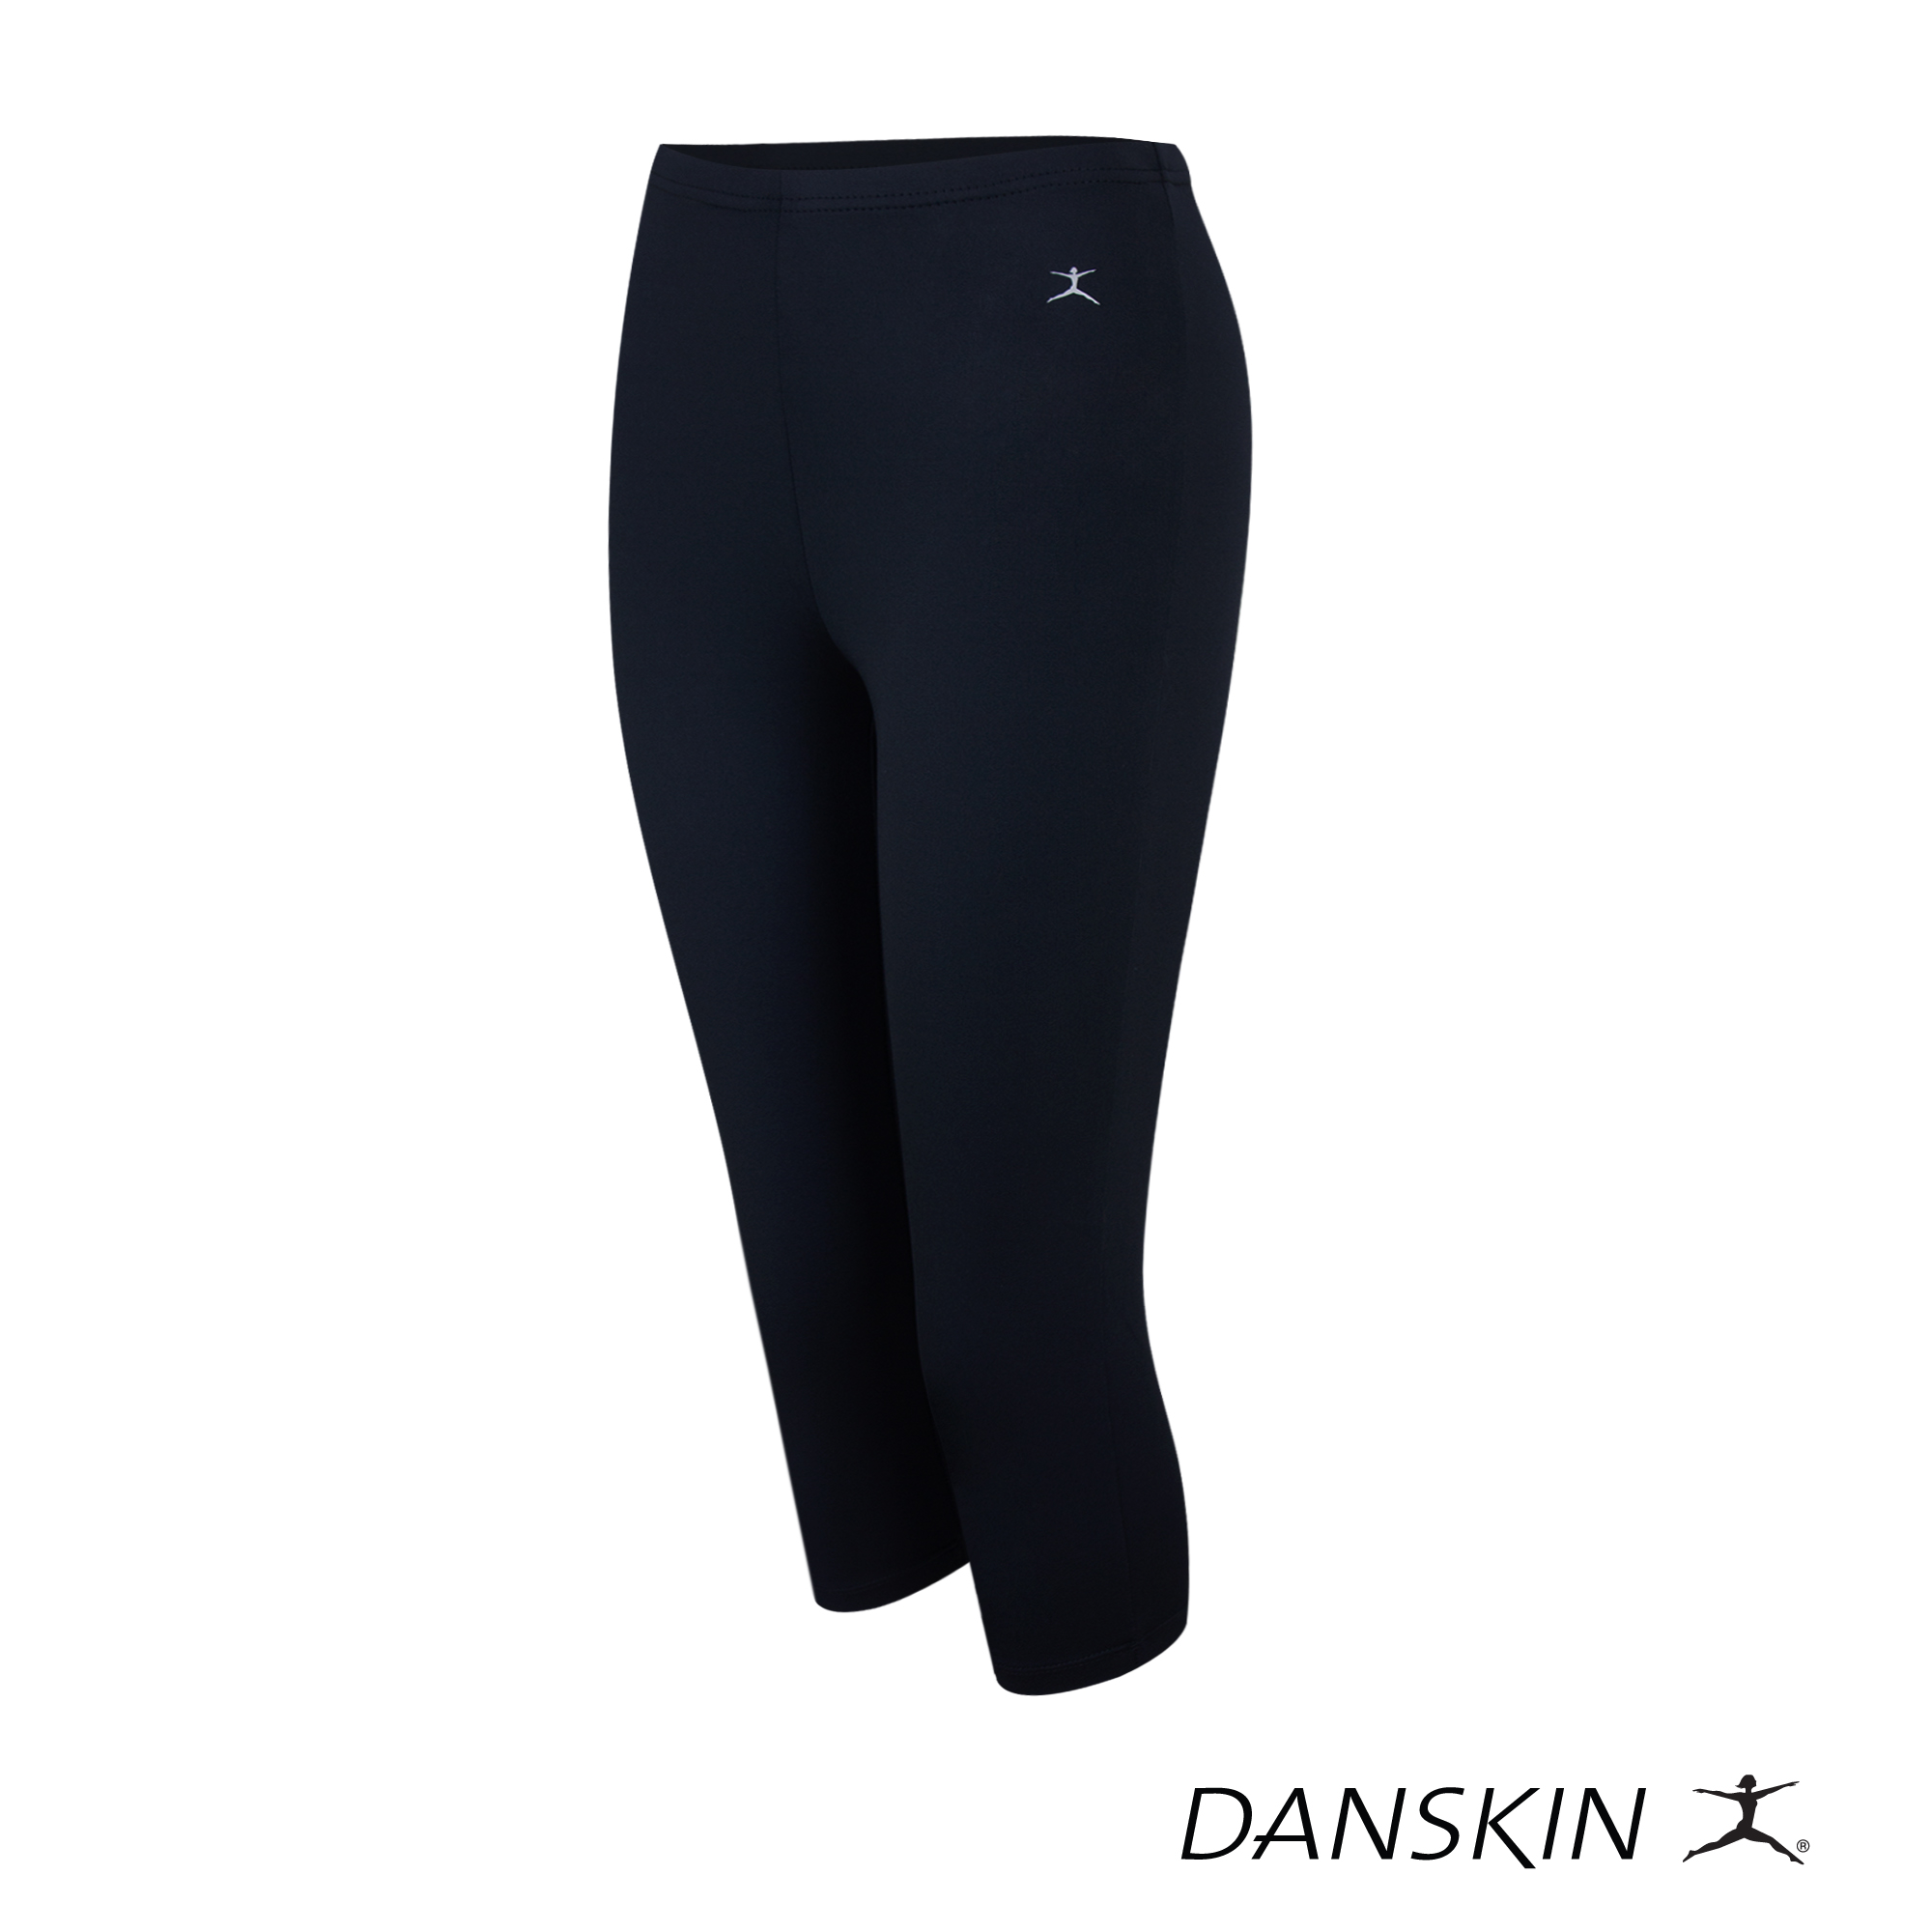 Danskin Black Body Fit Leggings w/ Pocket for Workout Gym Sports